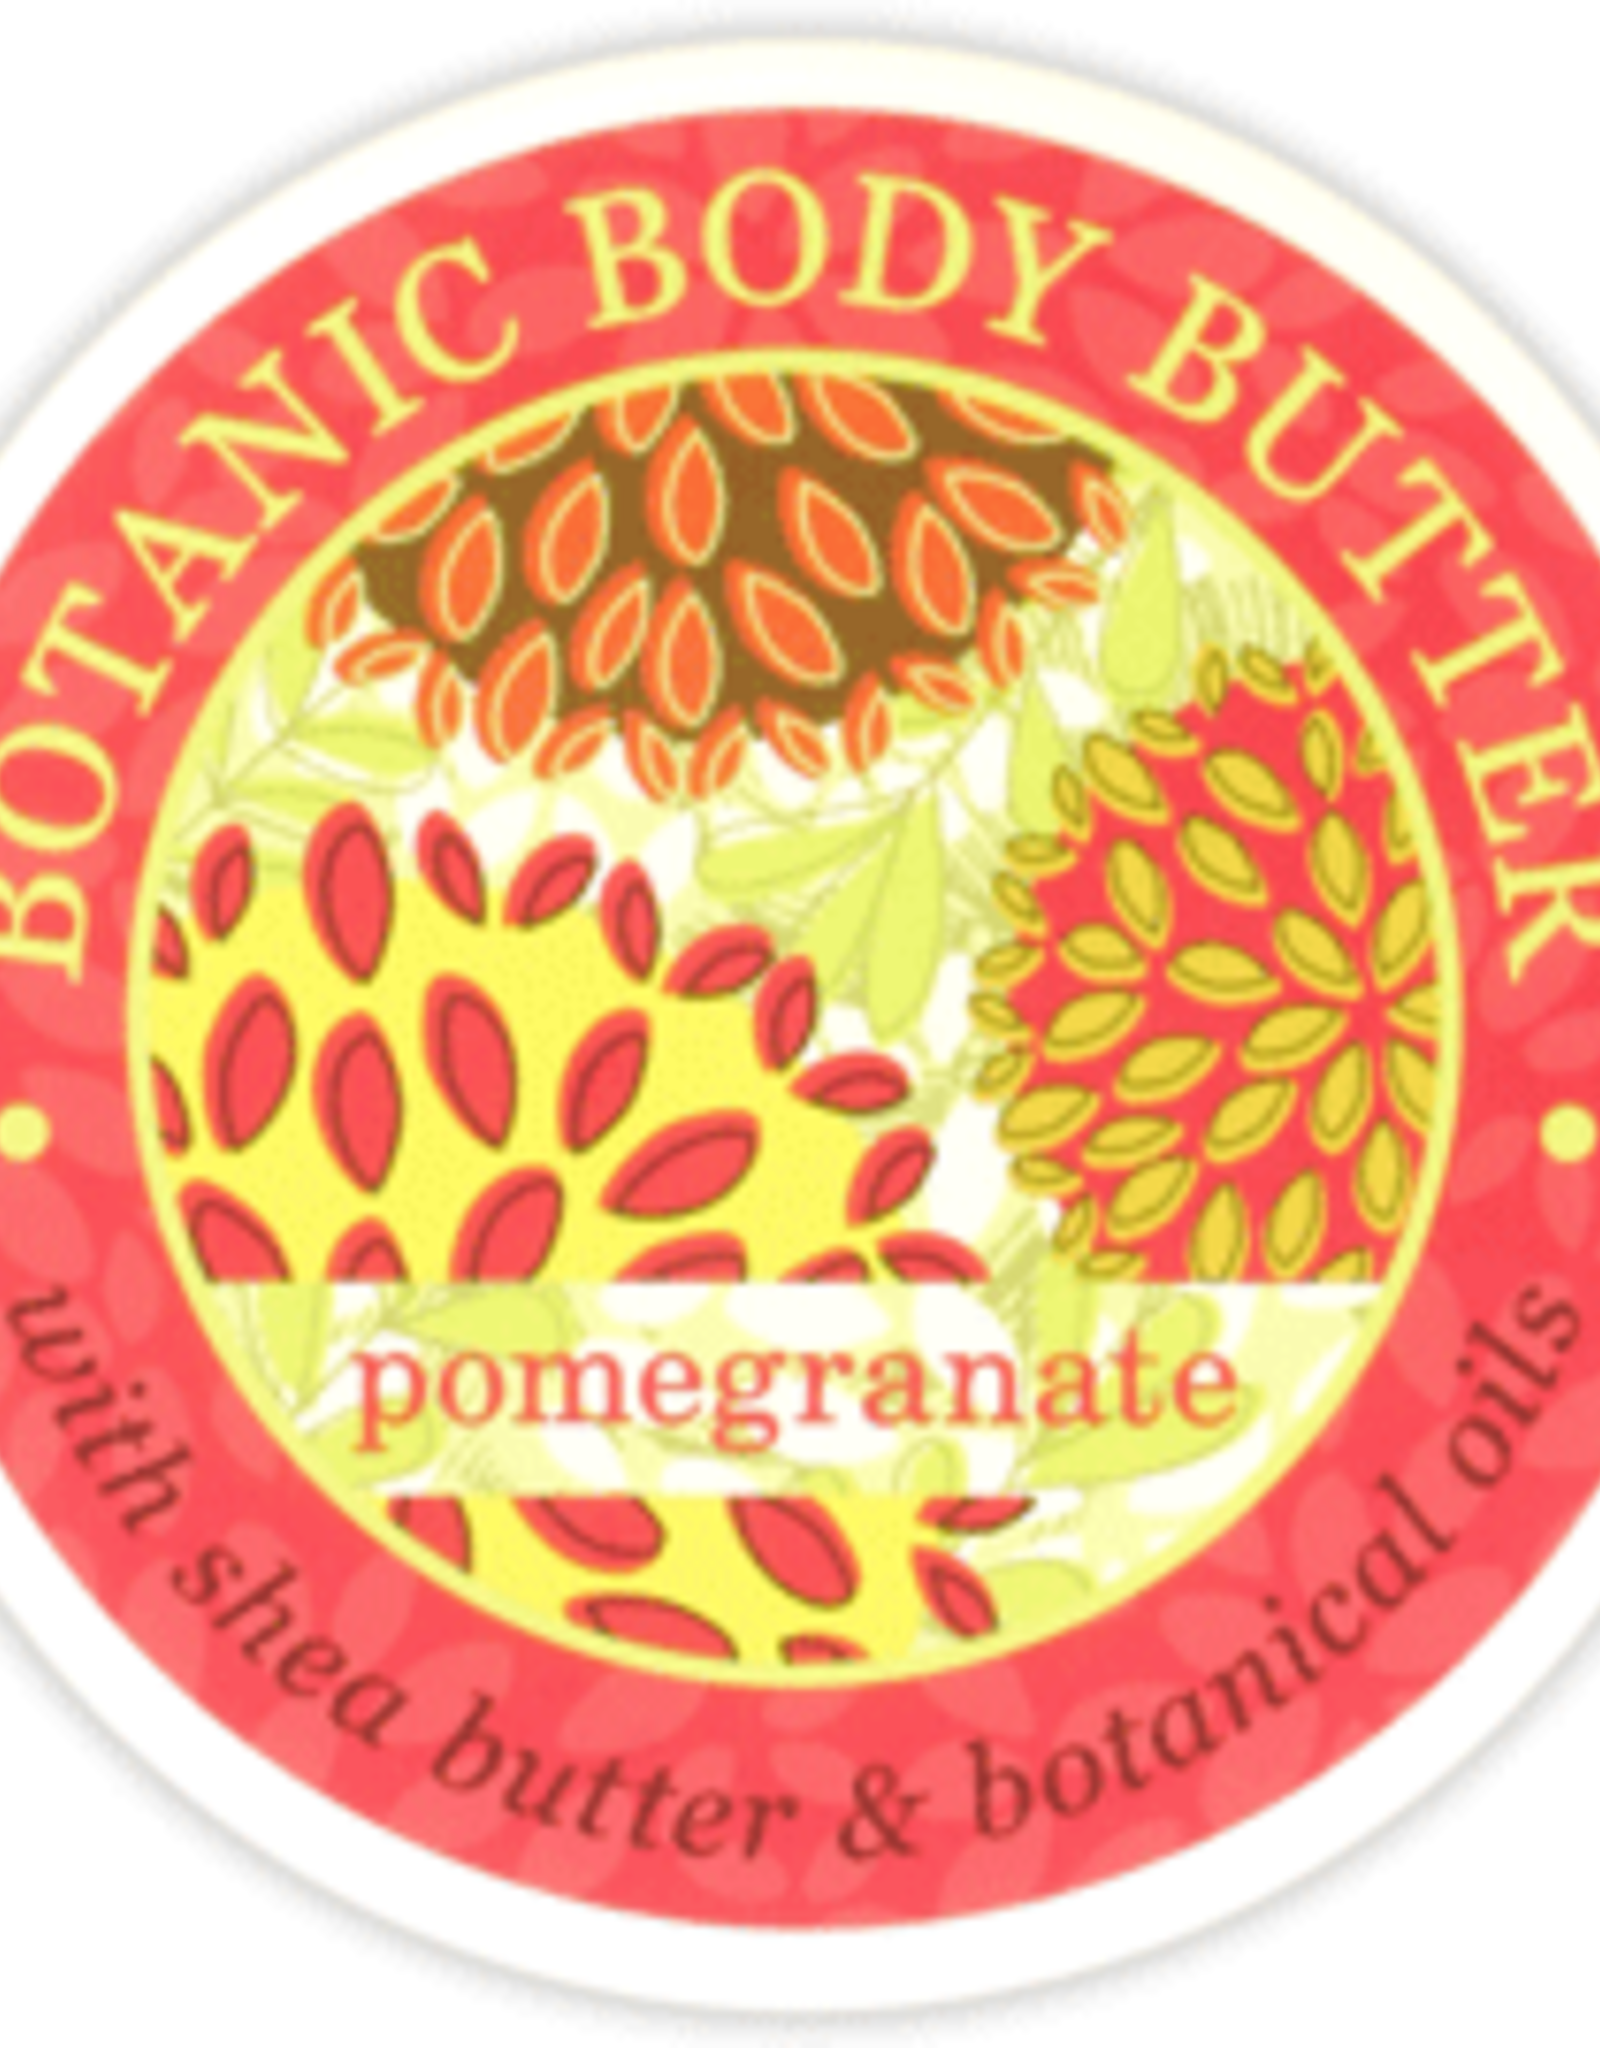 Personal Care Greenwich Bay - Pomegranate Body Butter